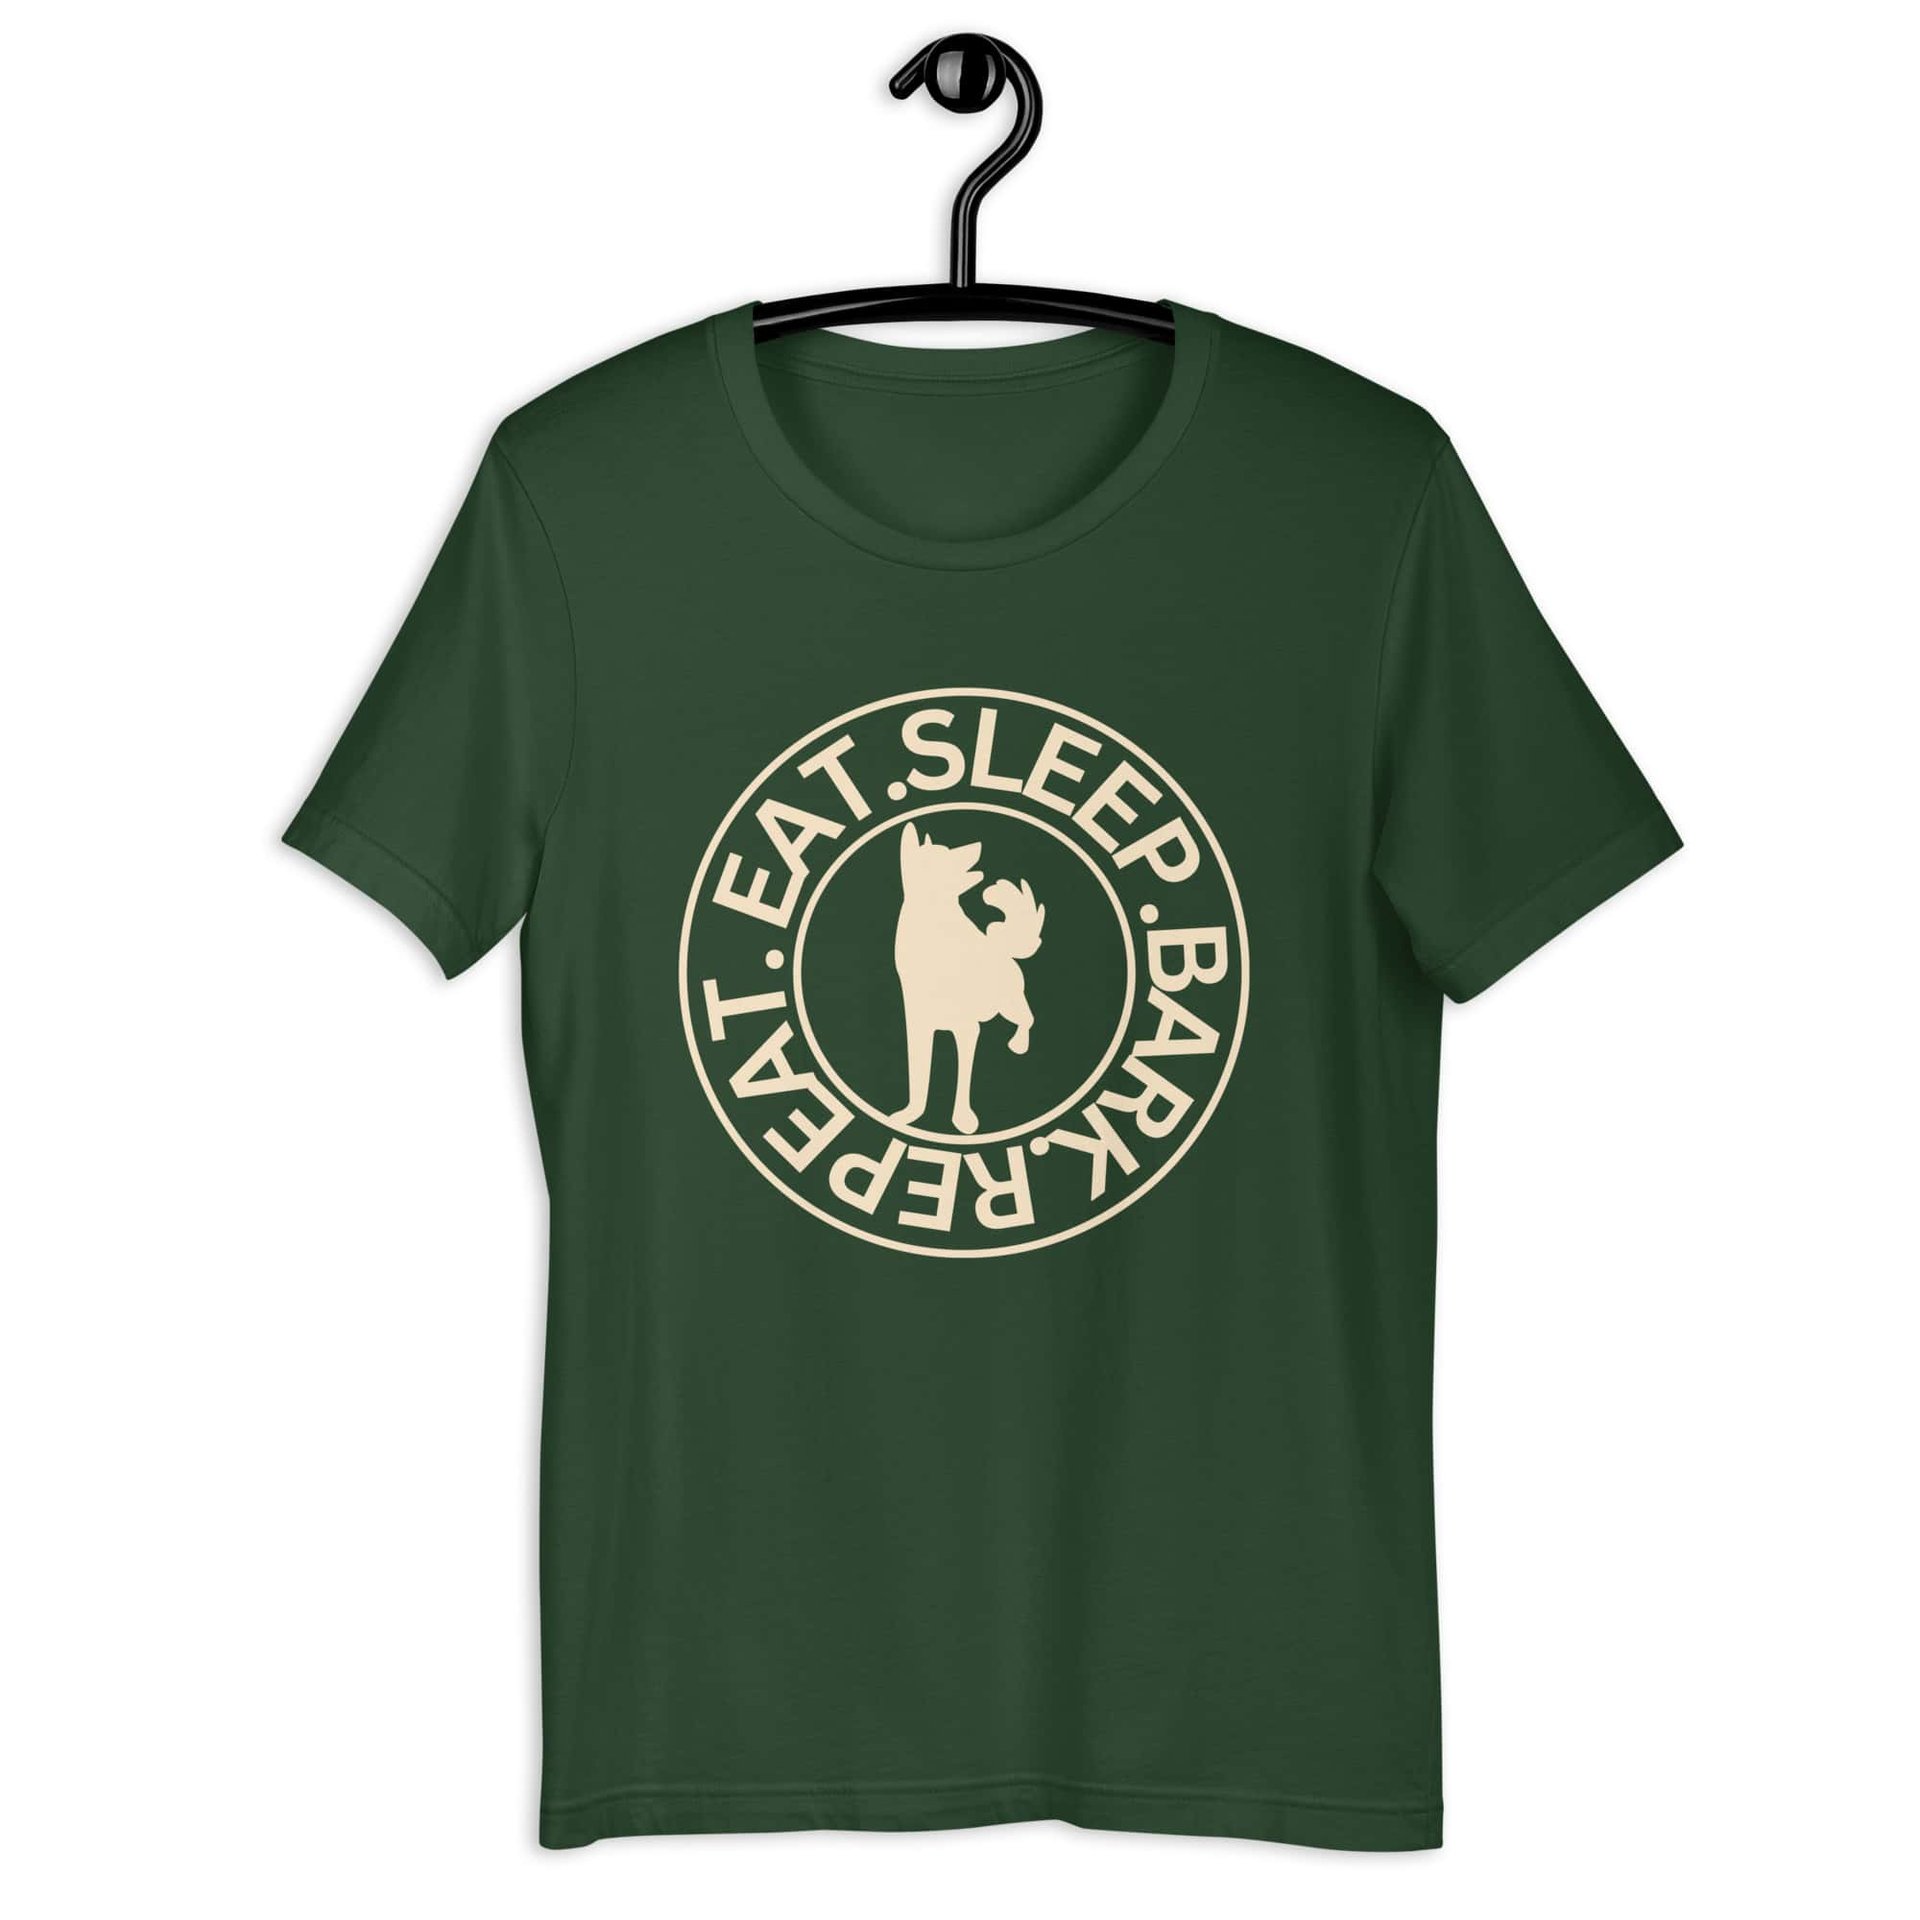 Eat Sleep Bark Repeat Shepherd Unisex T-Shirt. Forest